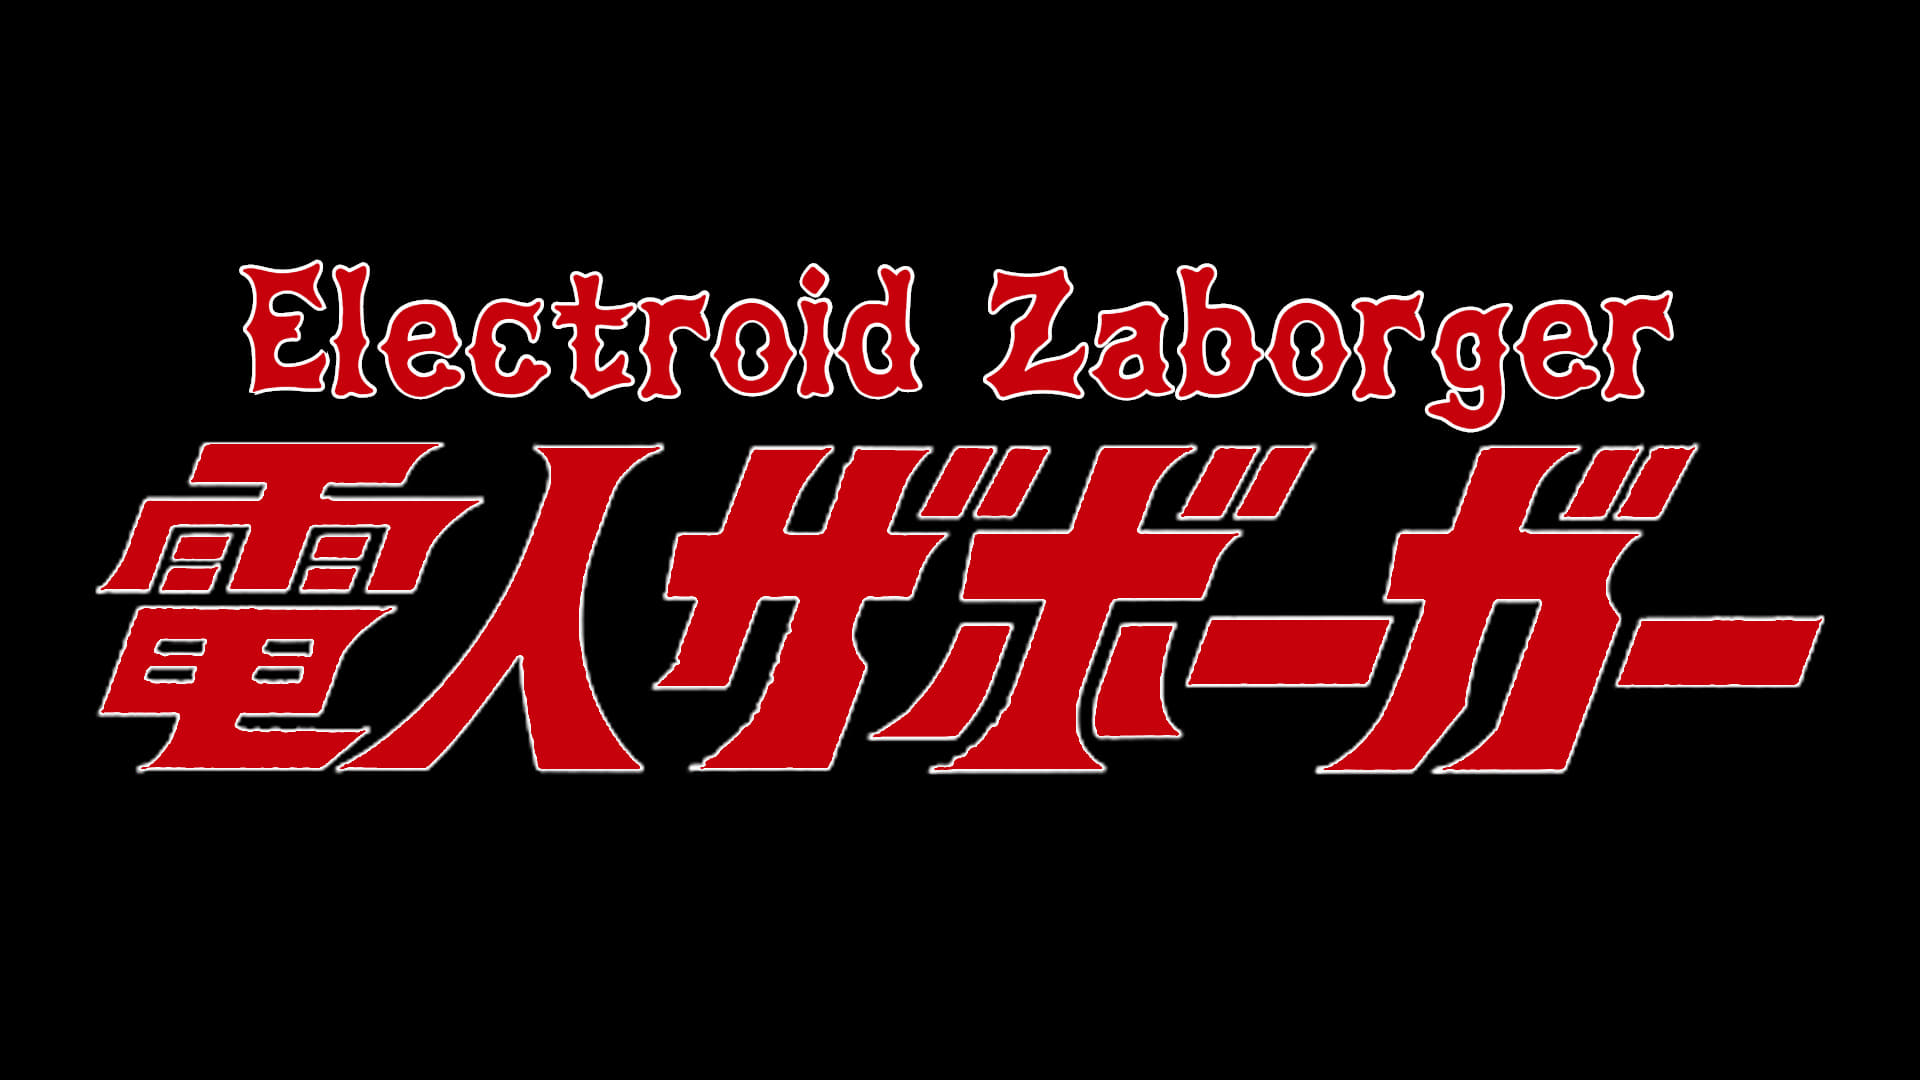 Zabogar - L'uomo elettrico